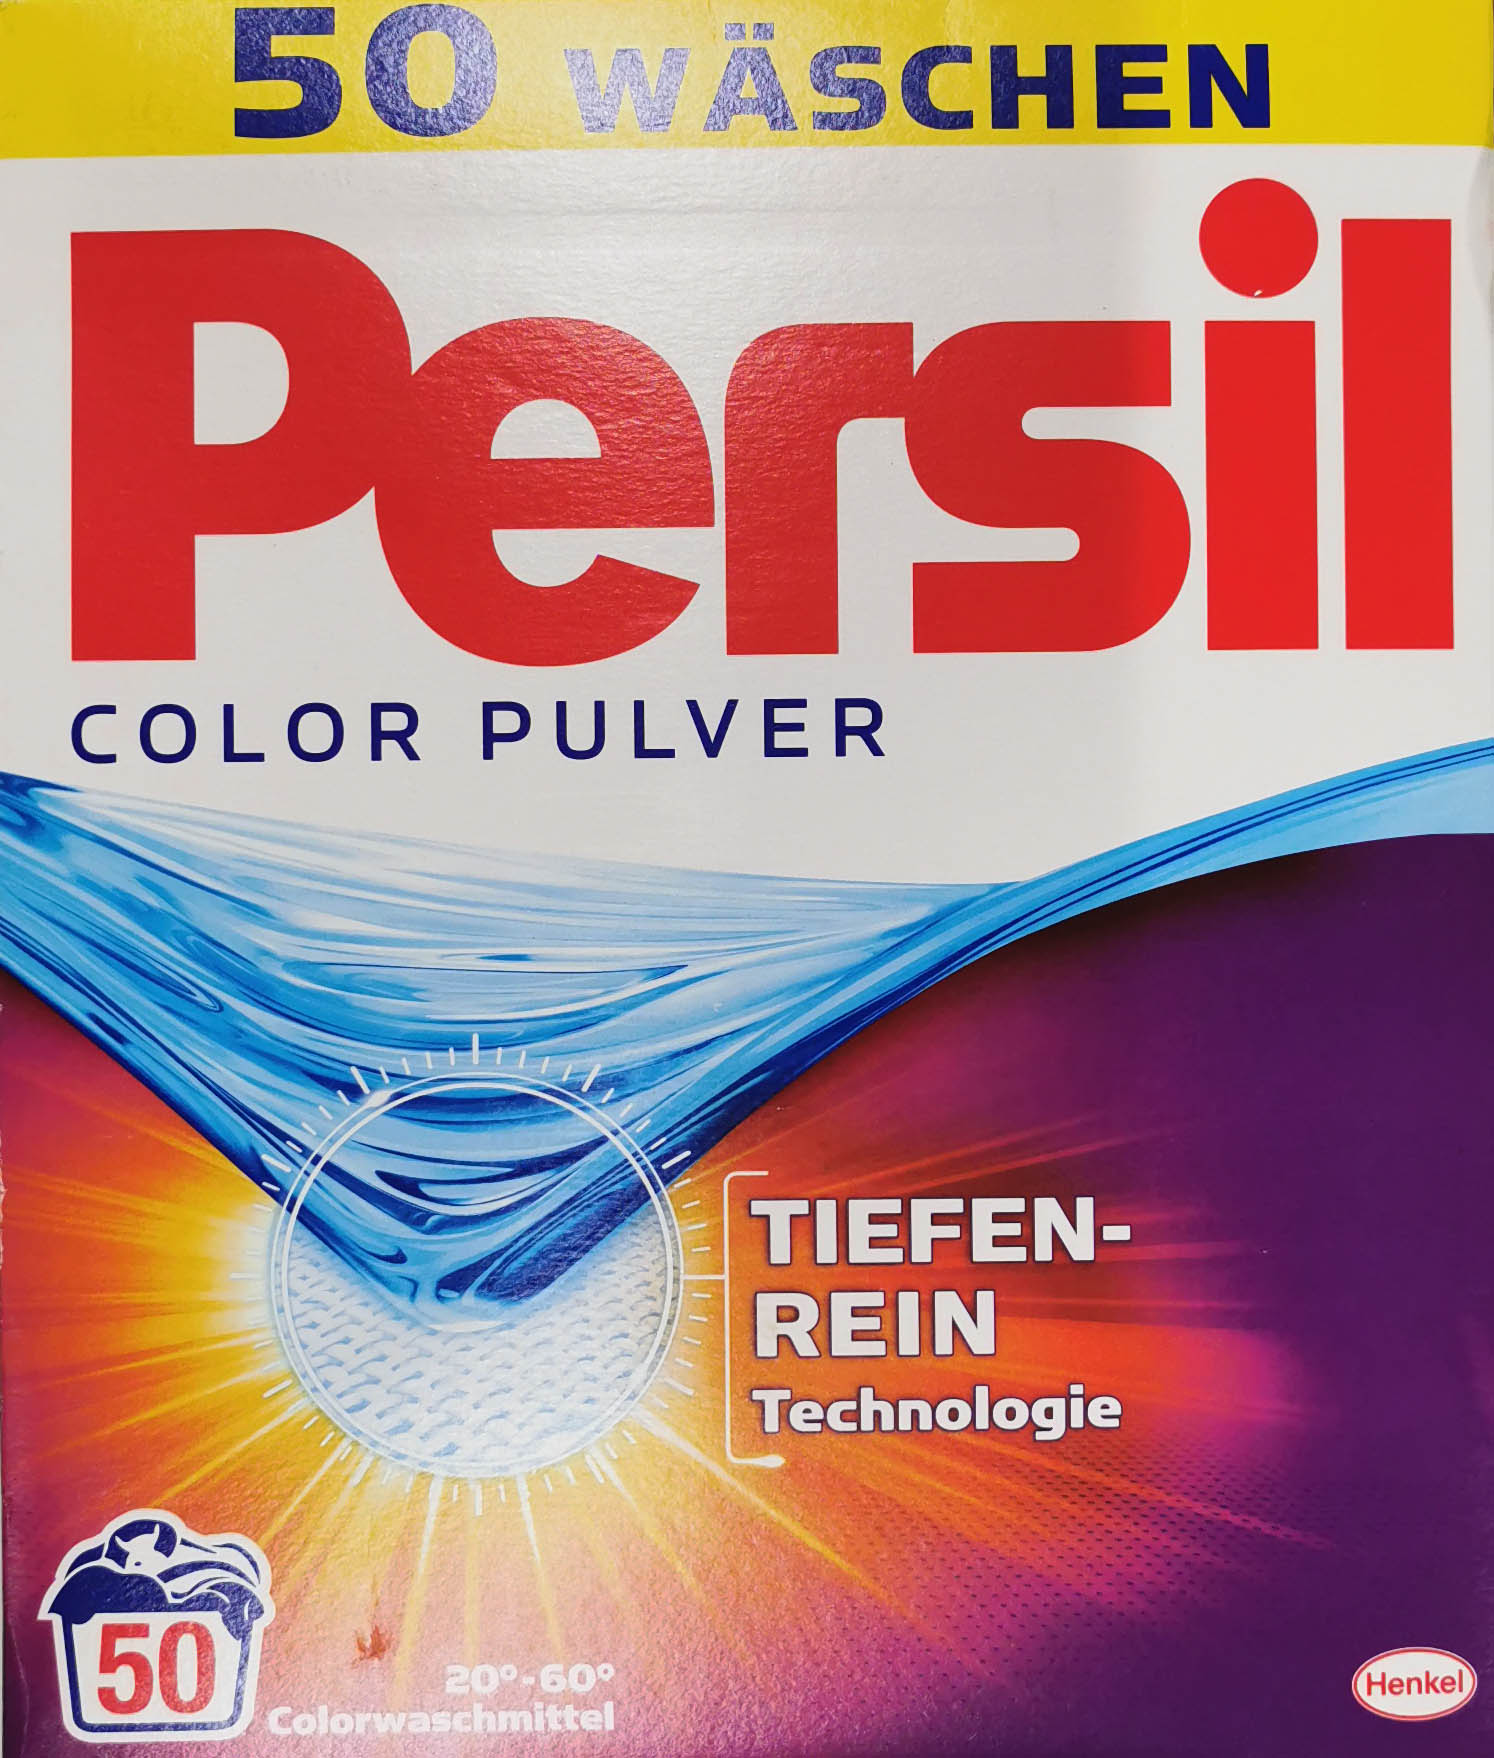 Persil Color powder detergent 50sc / 3.25kg